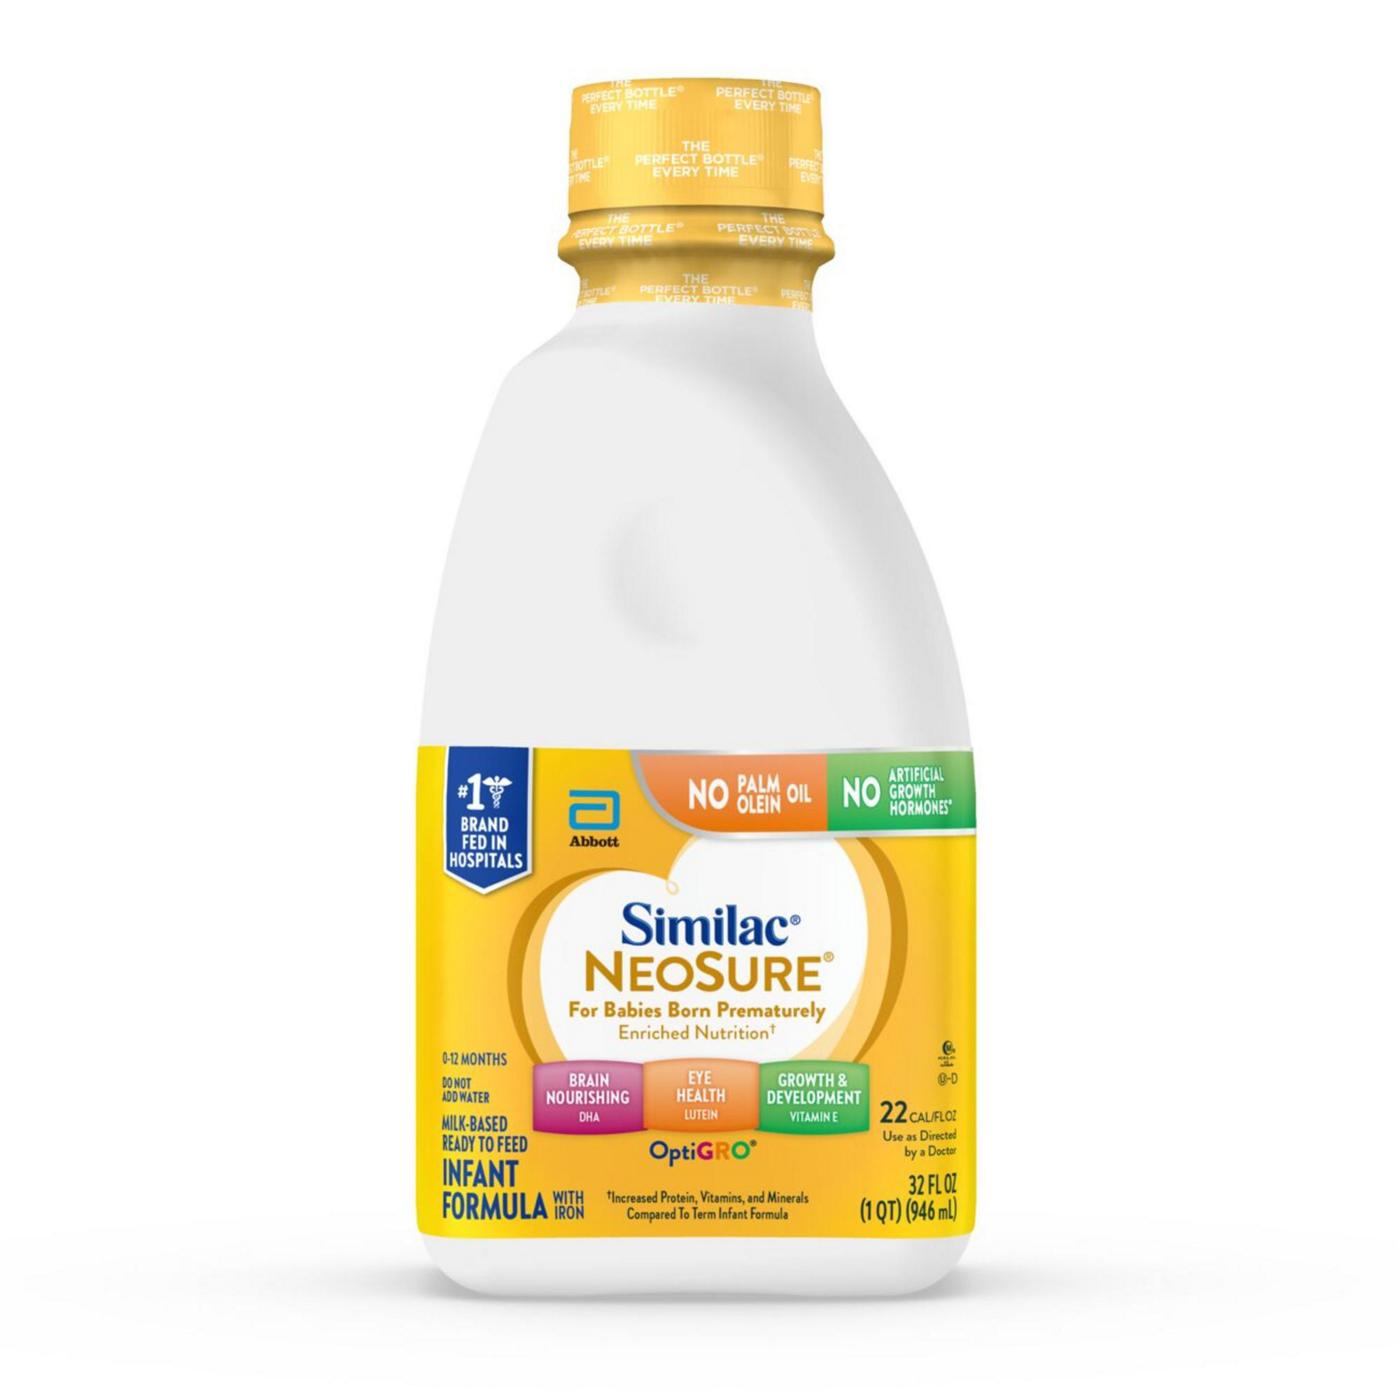 Similac NeoSure Milk-Based Ready-to-Feed Premature Infant Formula with Iron; image 1 of 4